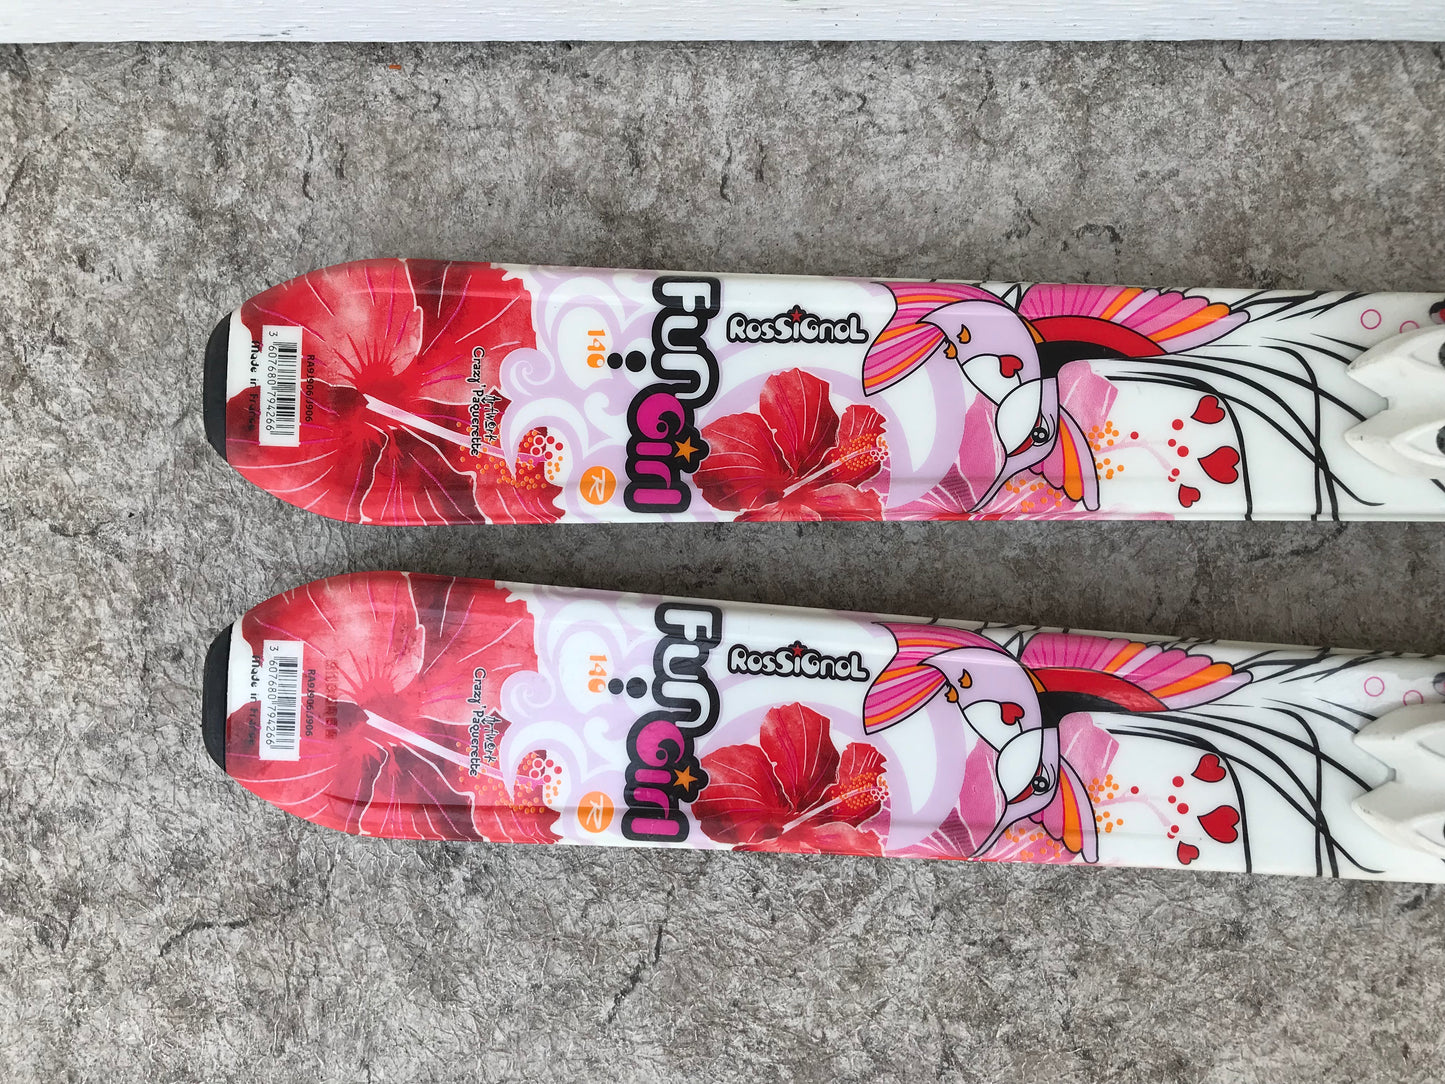 Ski 140 Rossignol Fun Girl White Red Pink Flowers Parabolic With Bindings